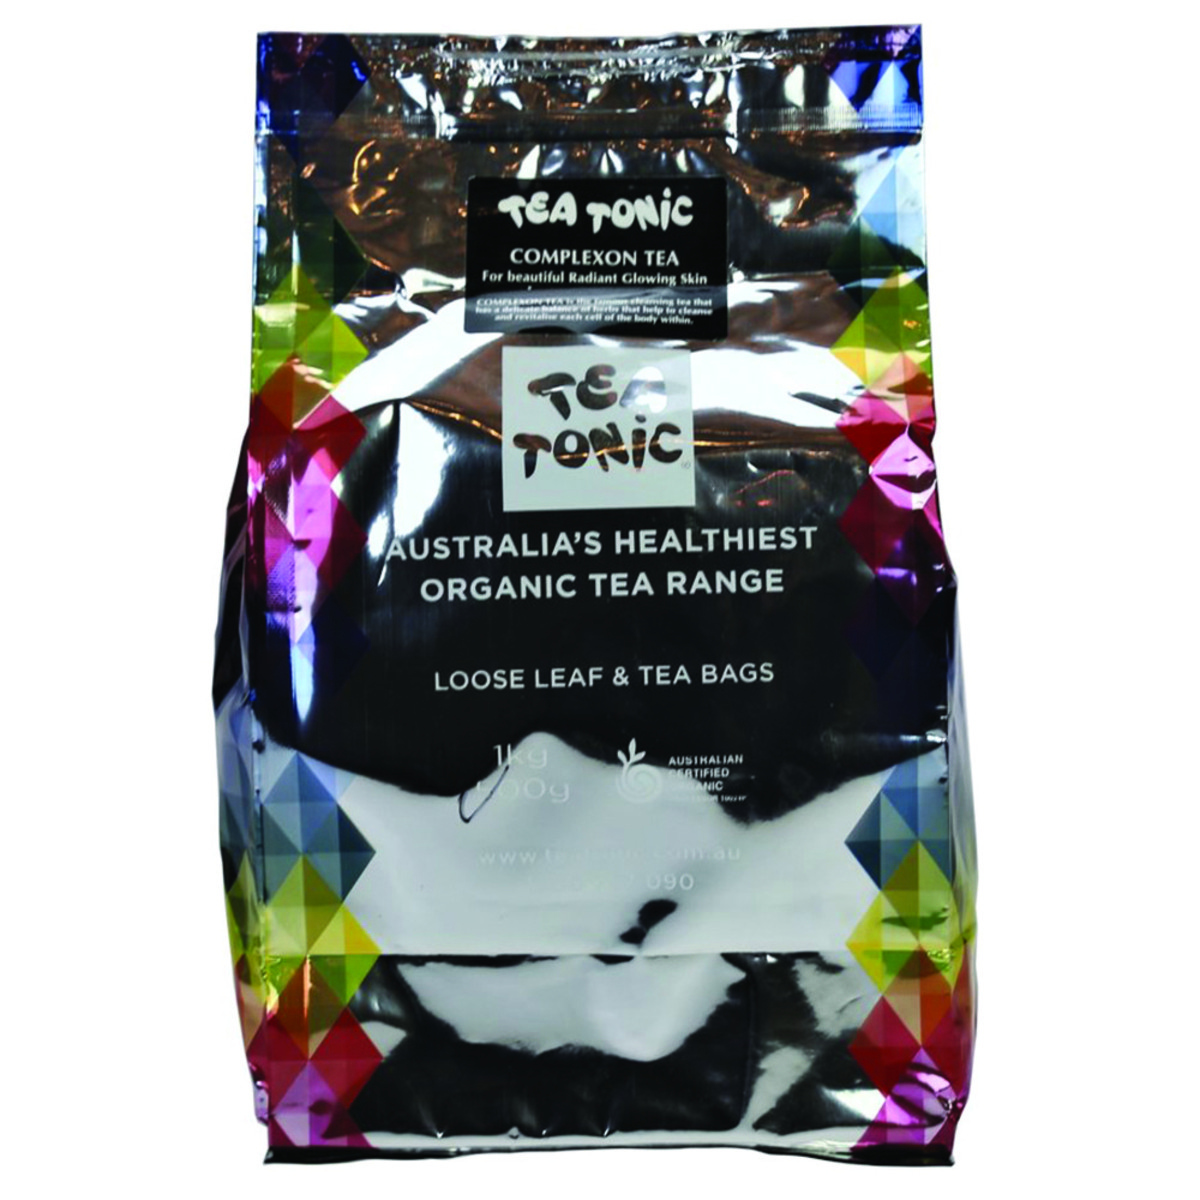 Tea Tonic Organic Complexion Tea Loose Leaf 500g